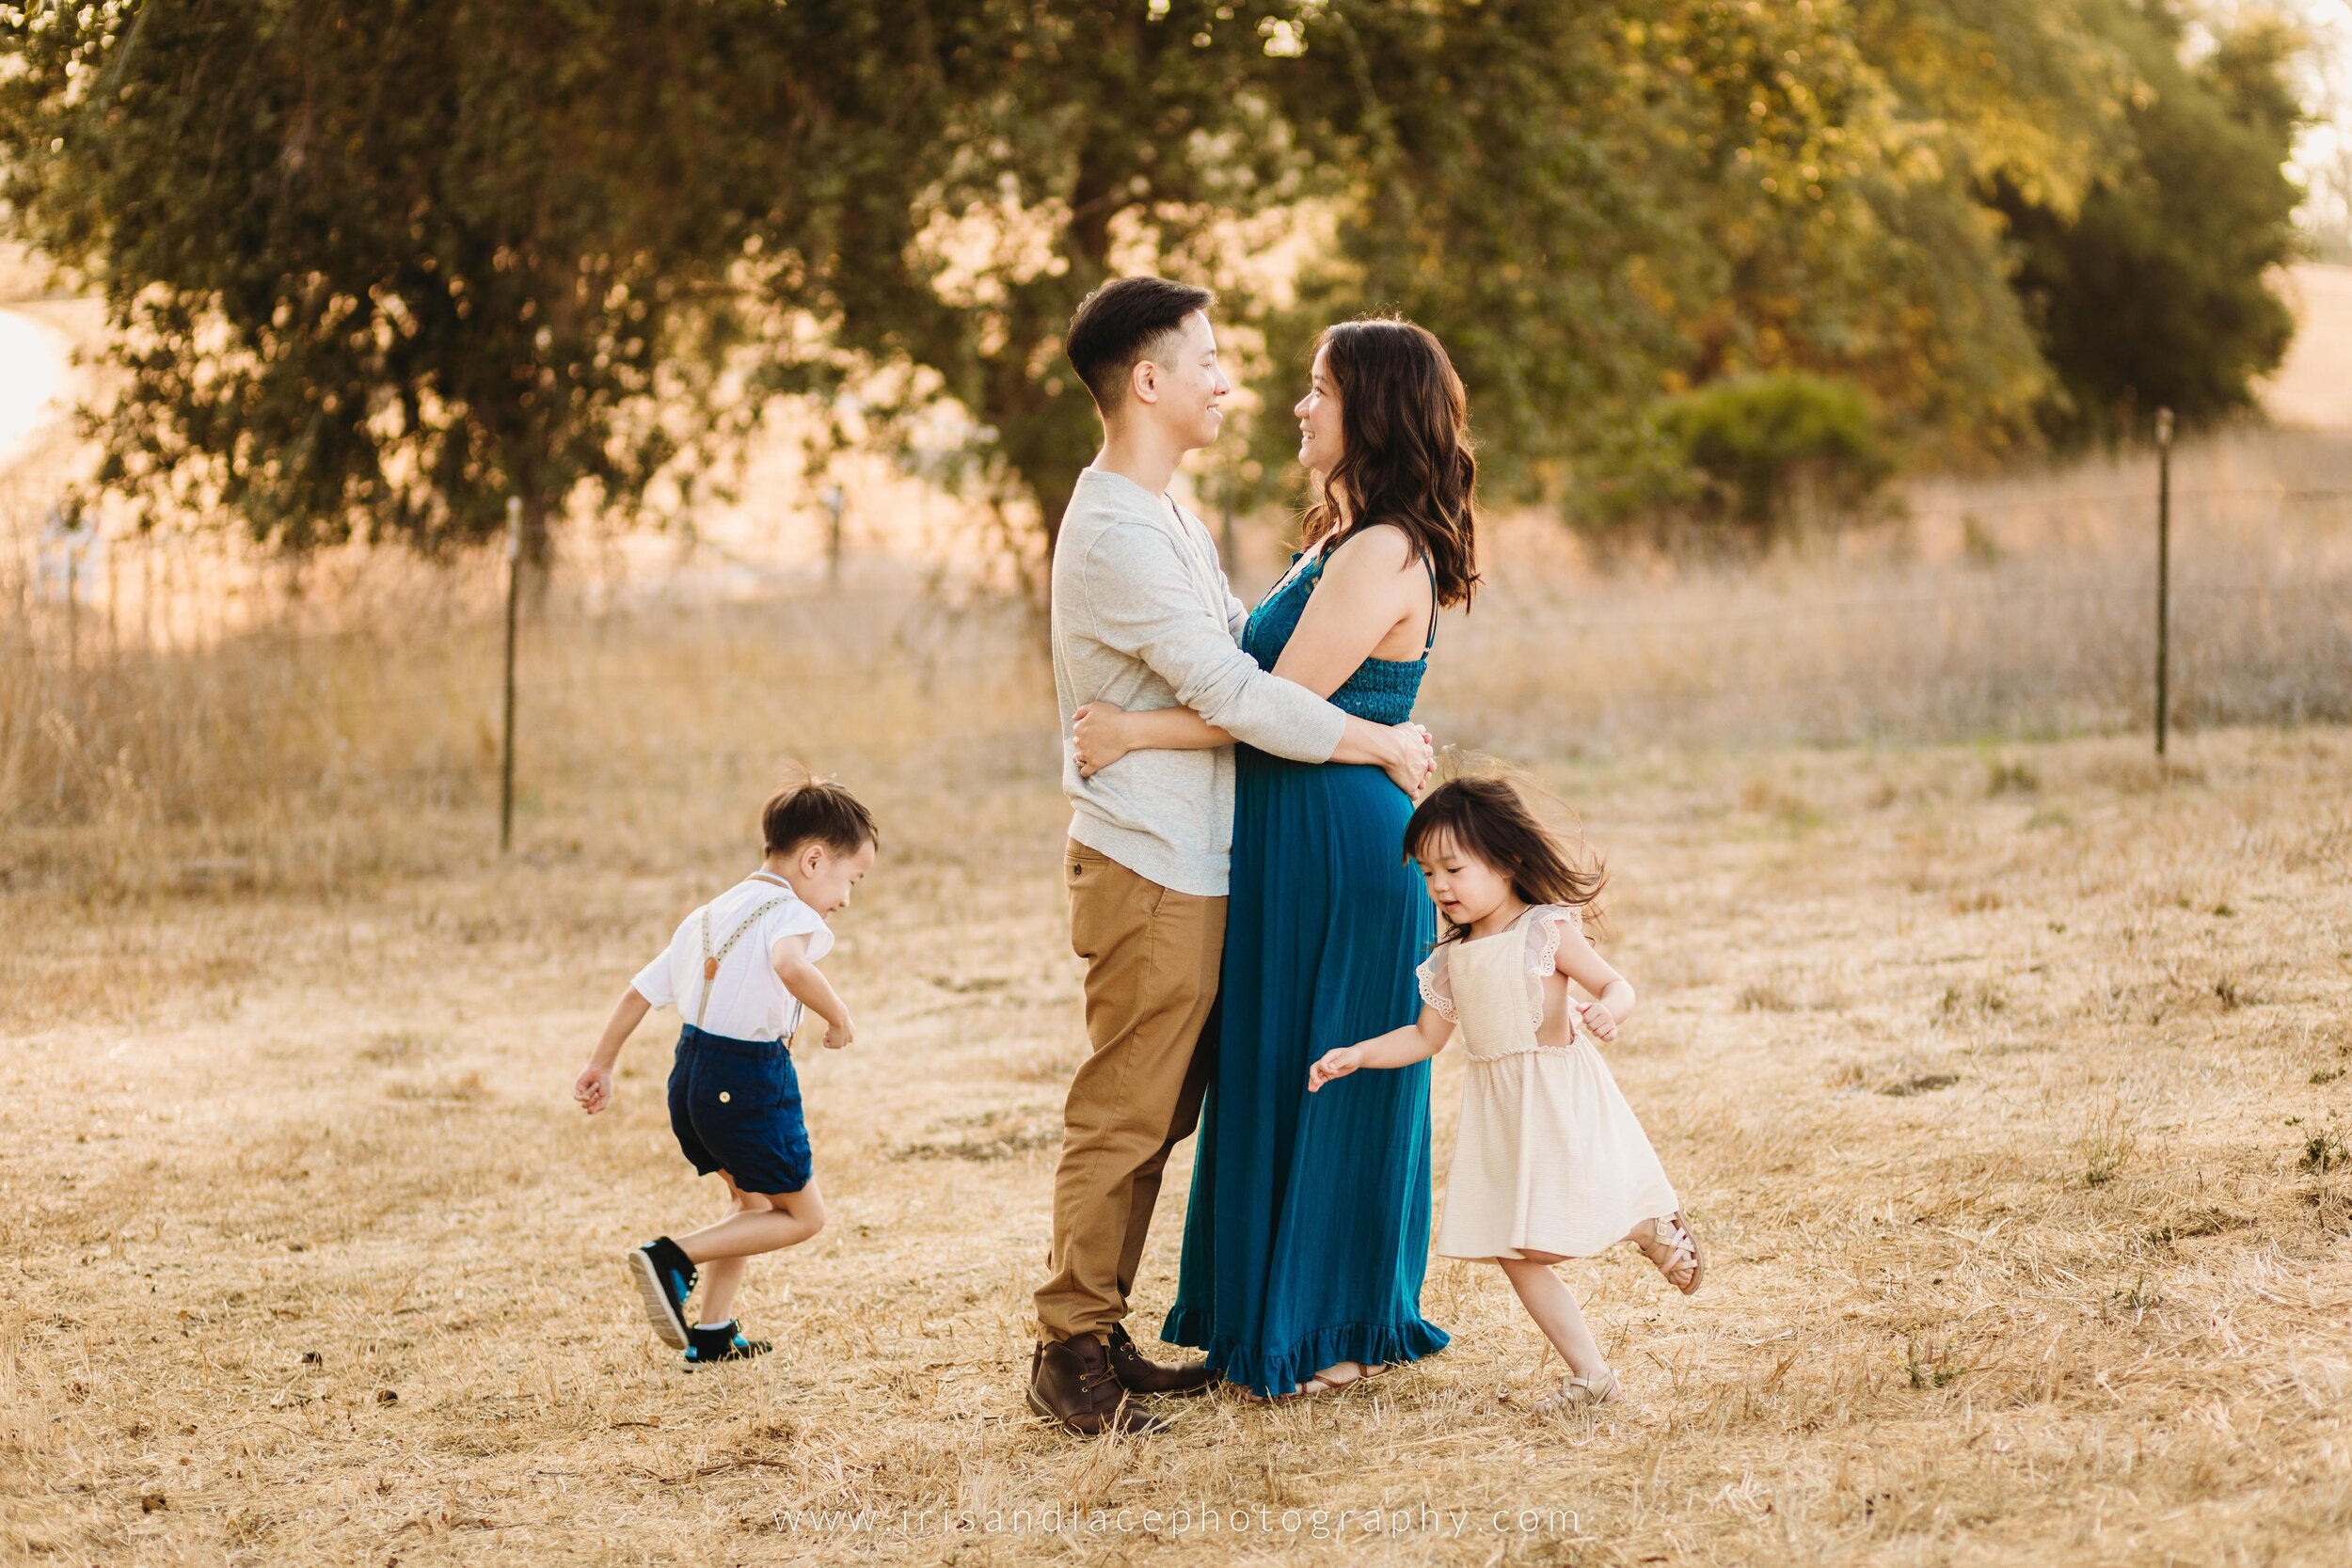 Palo Alto Photographer  |  Fall Lifestyle Family Photos  |  Iris and Lace Photography 